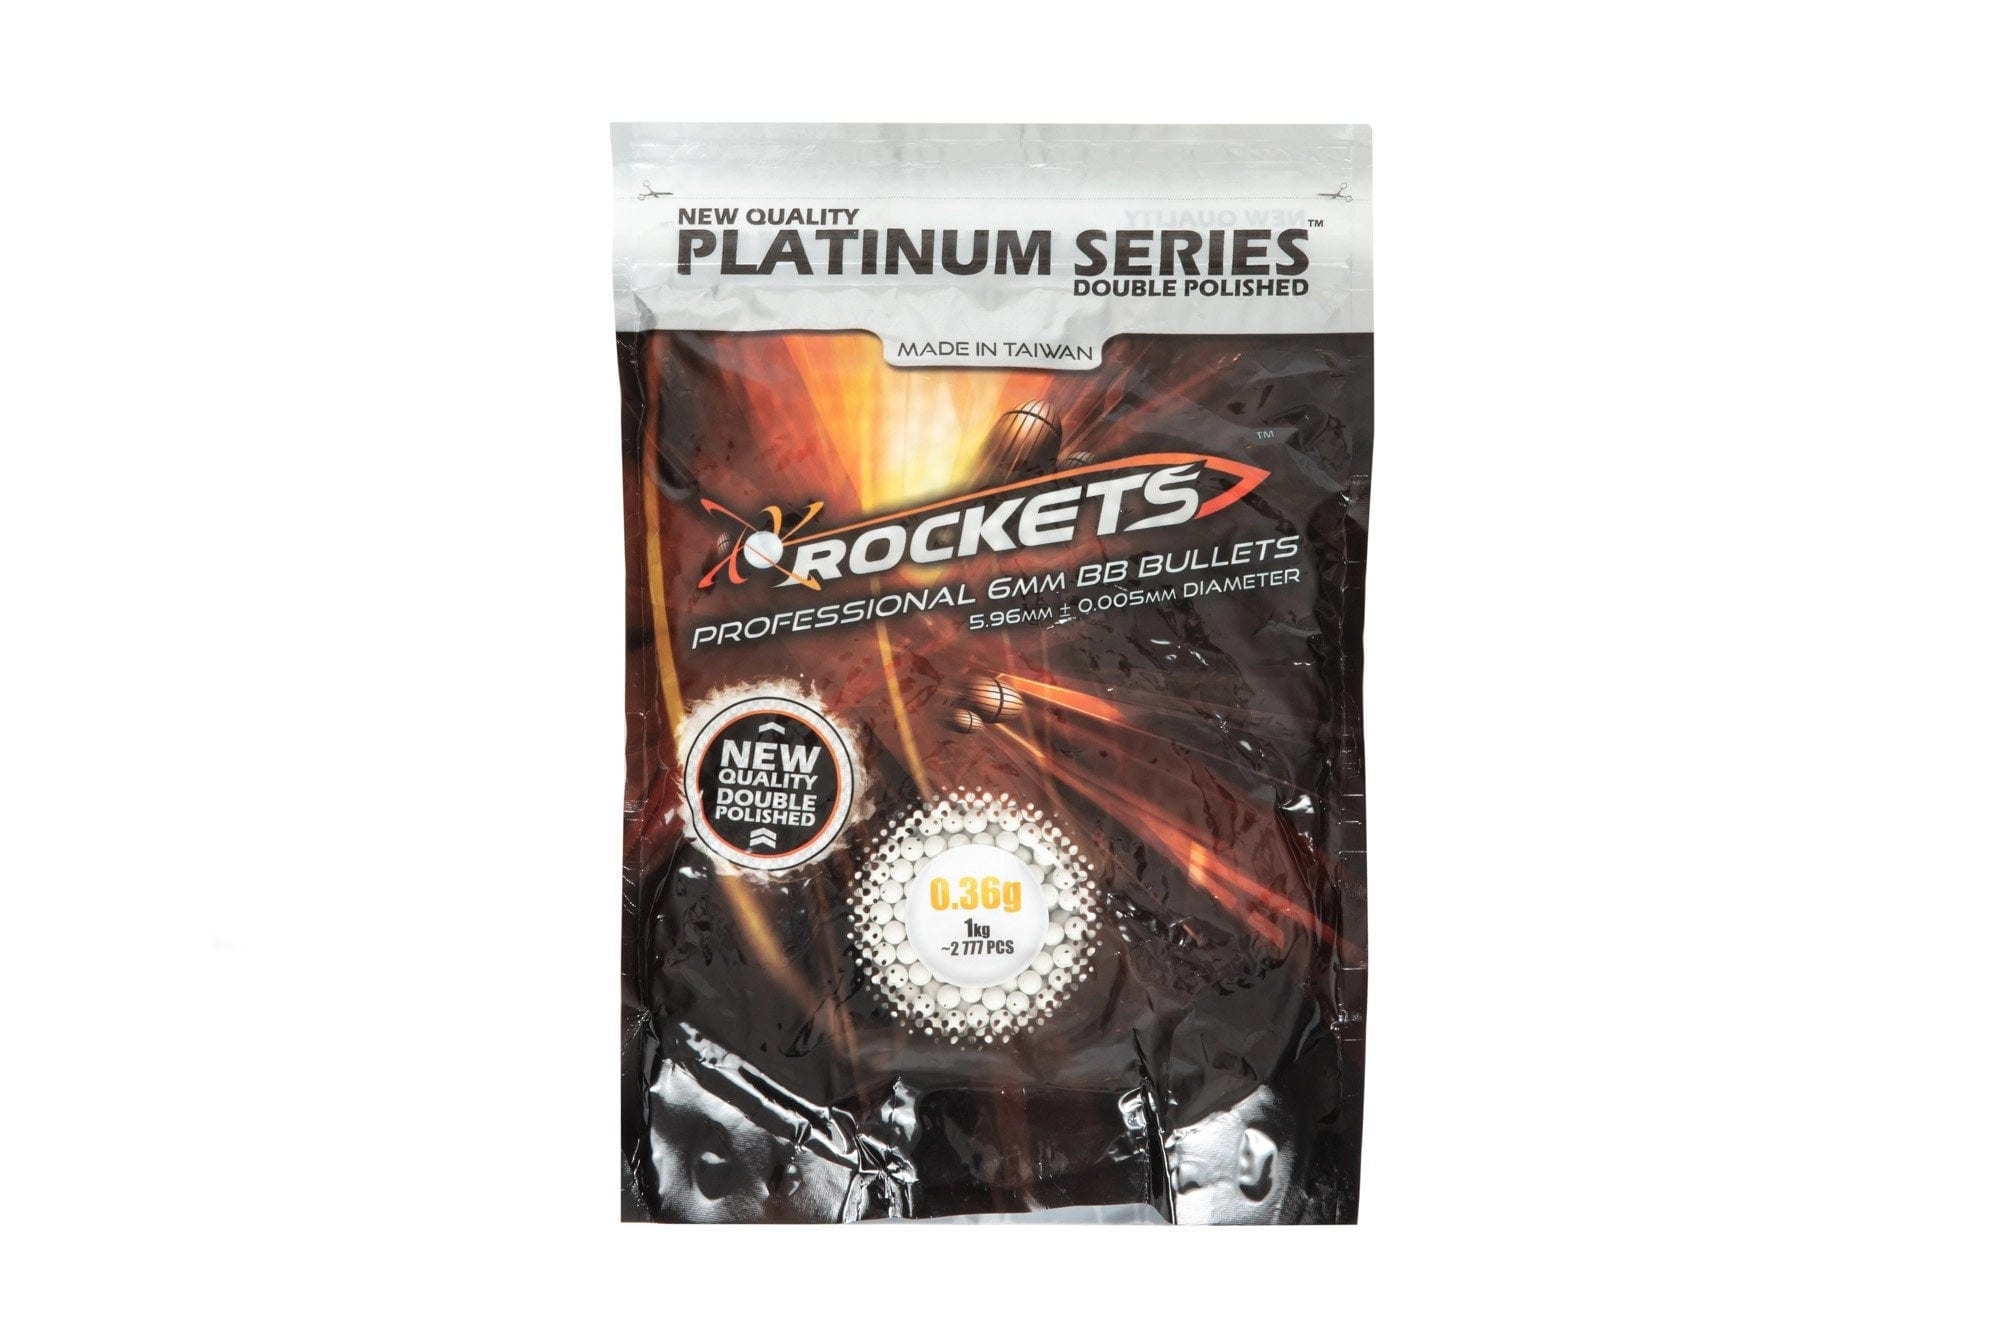 Rockets Platinum Series 0.36g BBs - 1kg